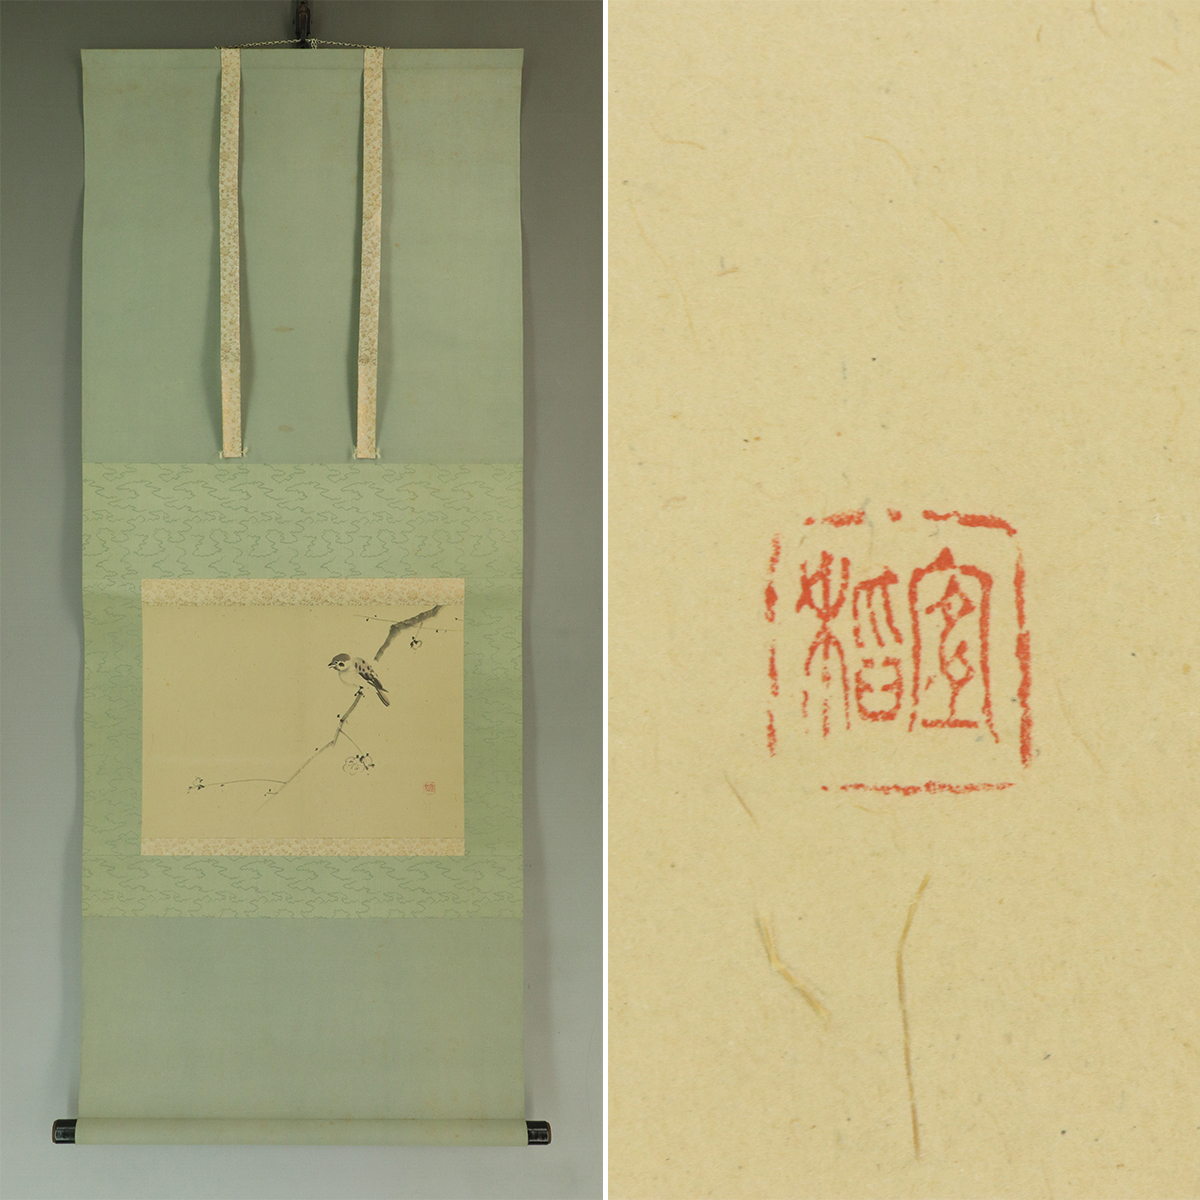 [Authentic] Yoshina Morimura [Plum and Sparrow] ◆Paper book◆Hanging scroll u06195b, Painting, Japanese painting, Flowers and Birds, Wildlife